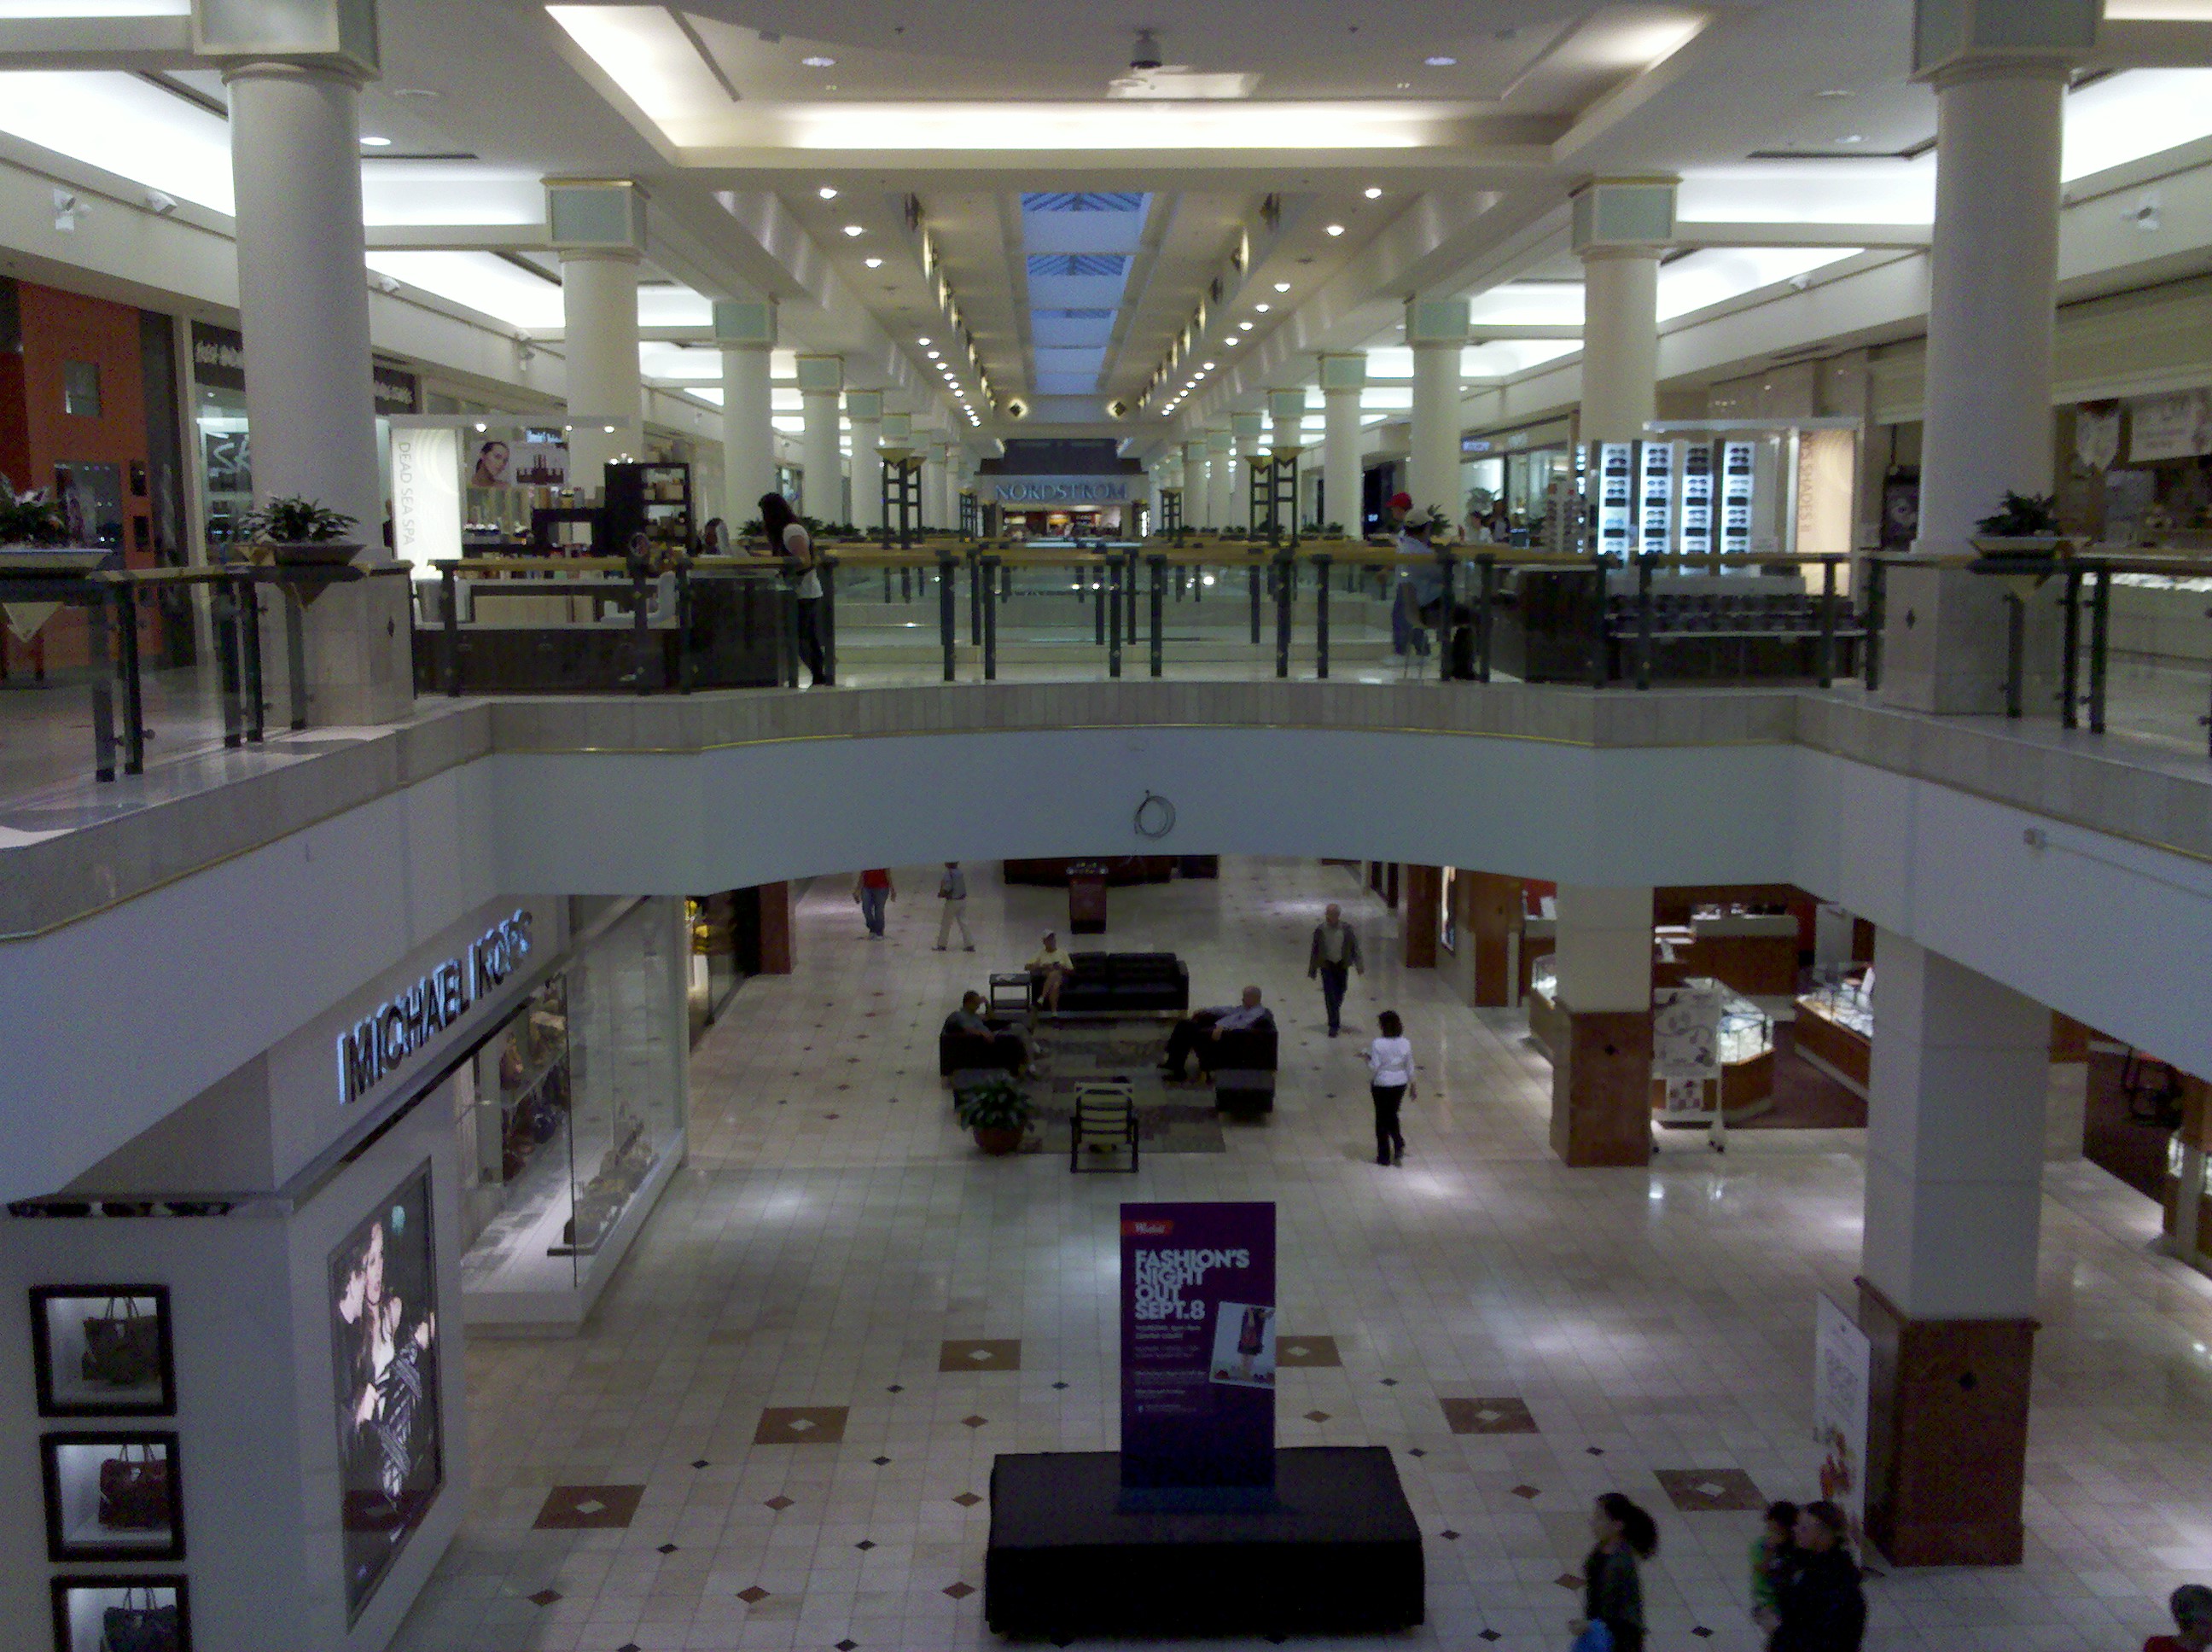 File:Potomac mills mall.jpg - Wikipedia